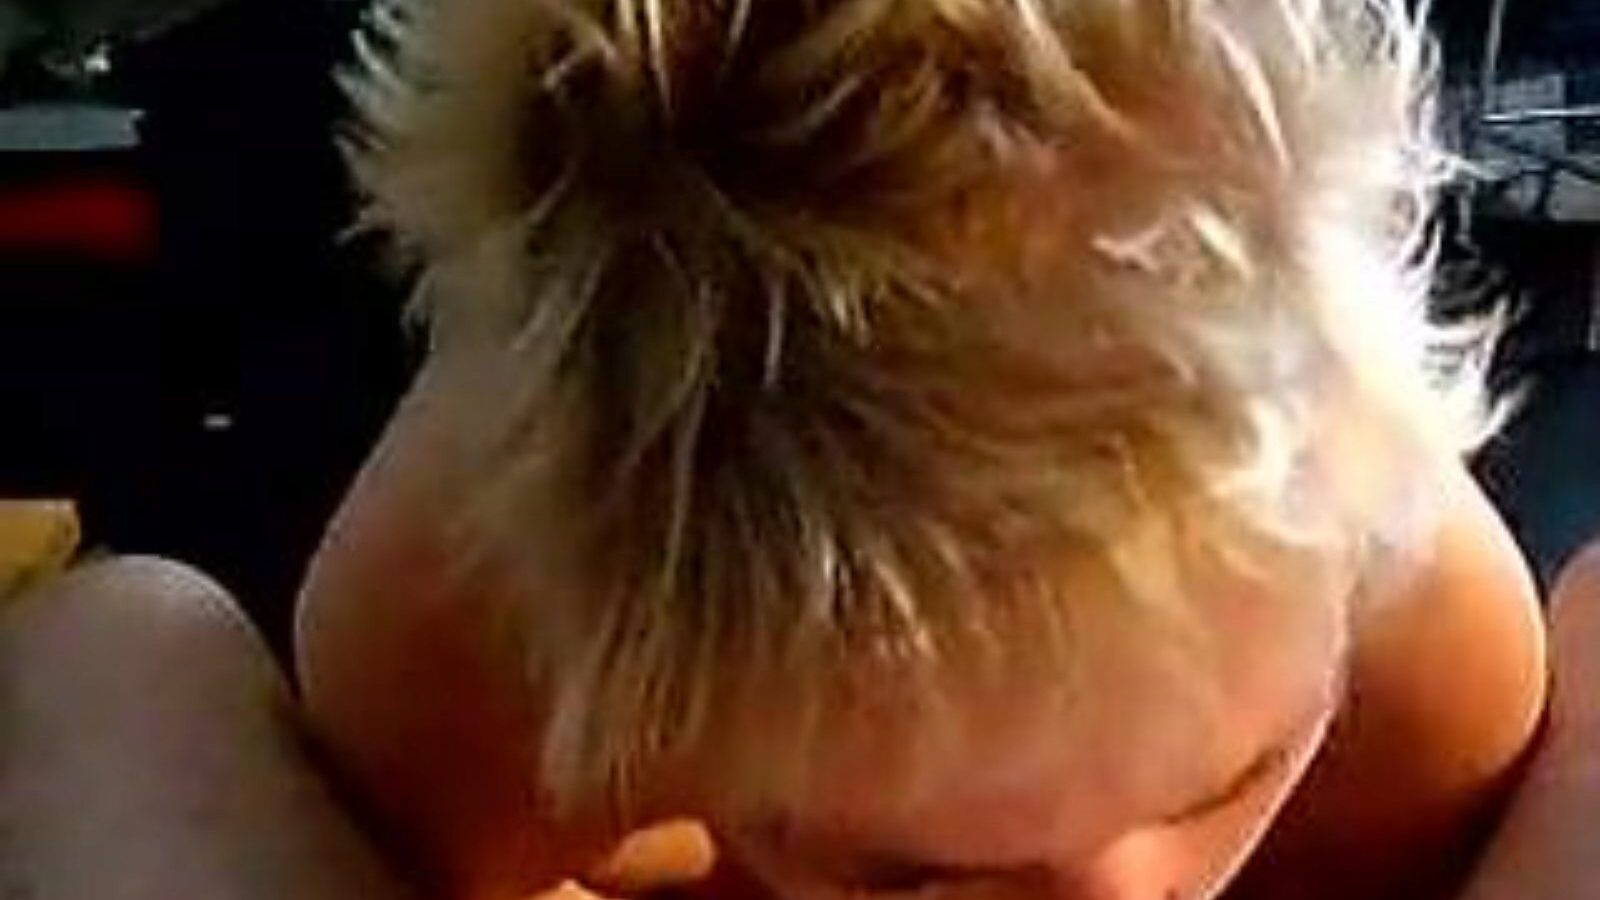 leuke dame：自制的＆老女孩色情视频A6-Xhamster在Xhamster上免费观看leuke dame的管fuckfest电影，其中有荷兰自制的，老女孩和吸吮色情剪辑演出的最热收藏